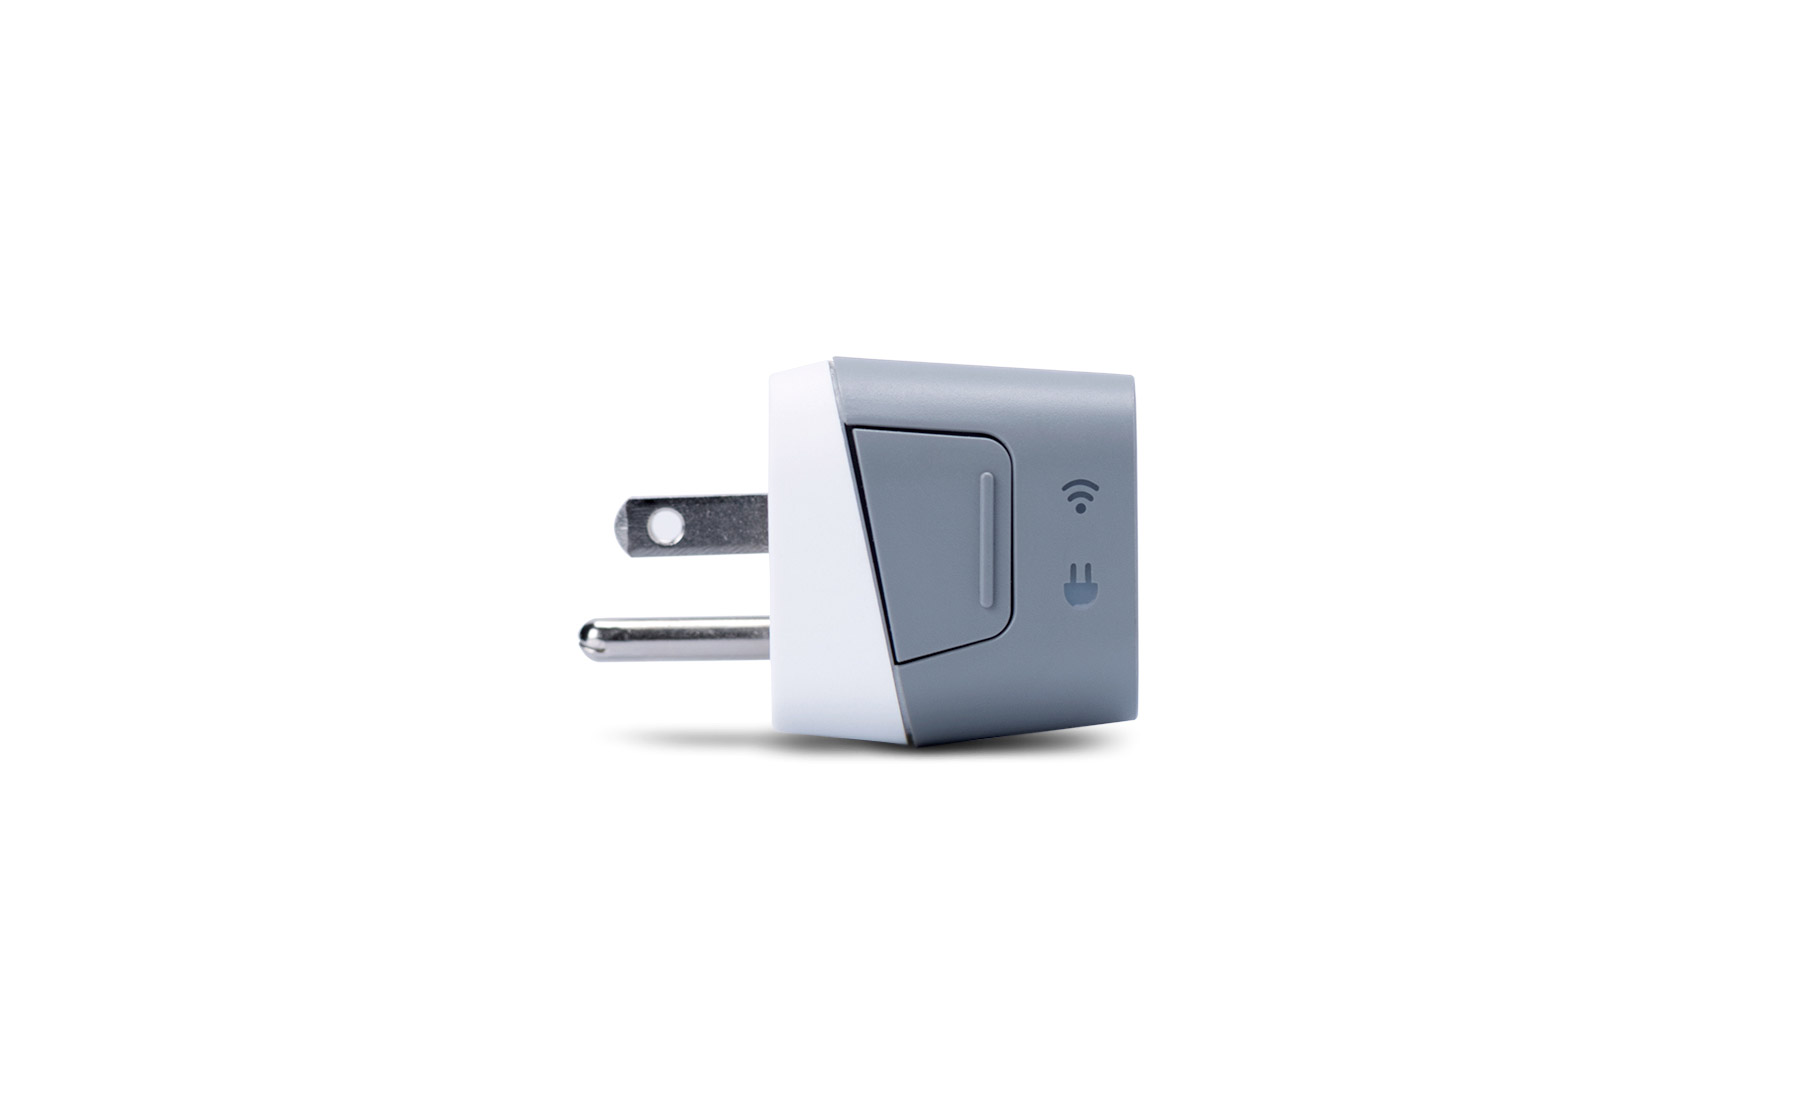 iHome Flow Smart Plug (Wi-Fi Indoor Smart Plug)